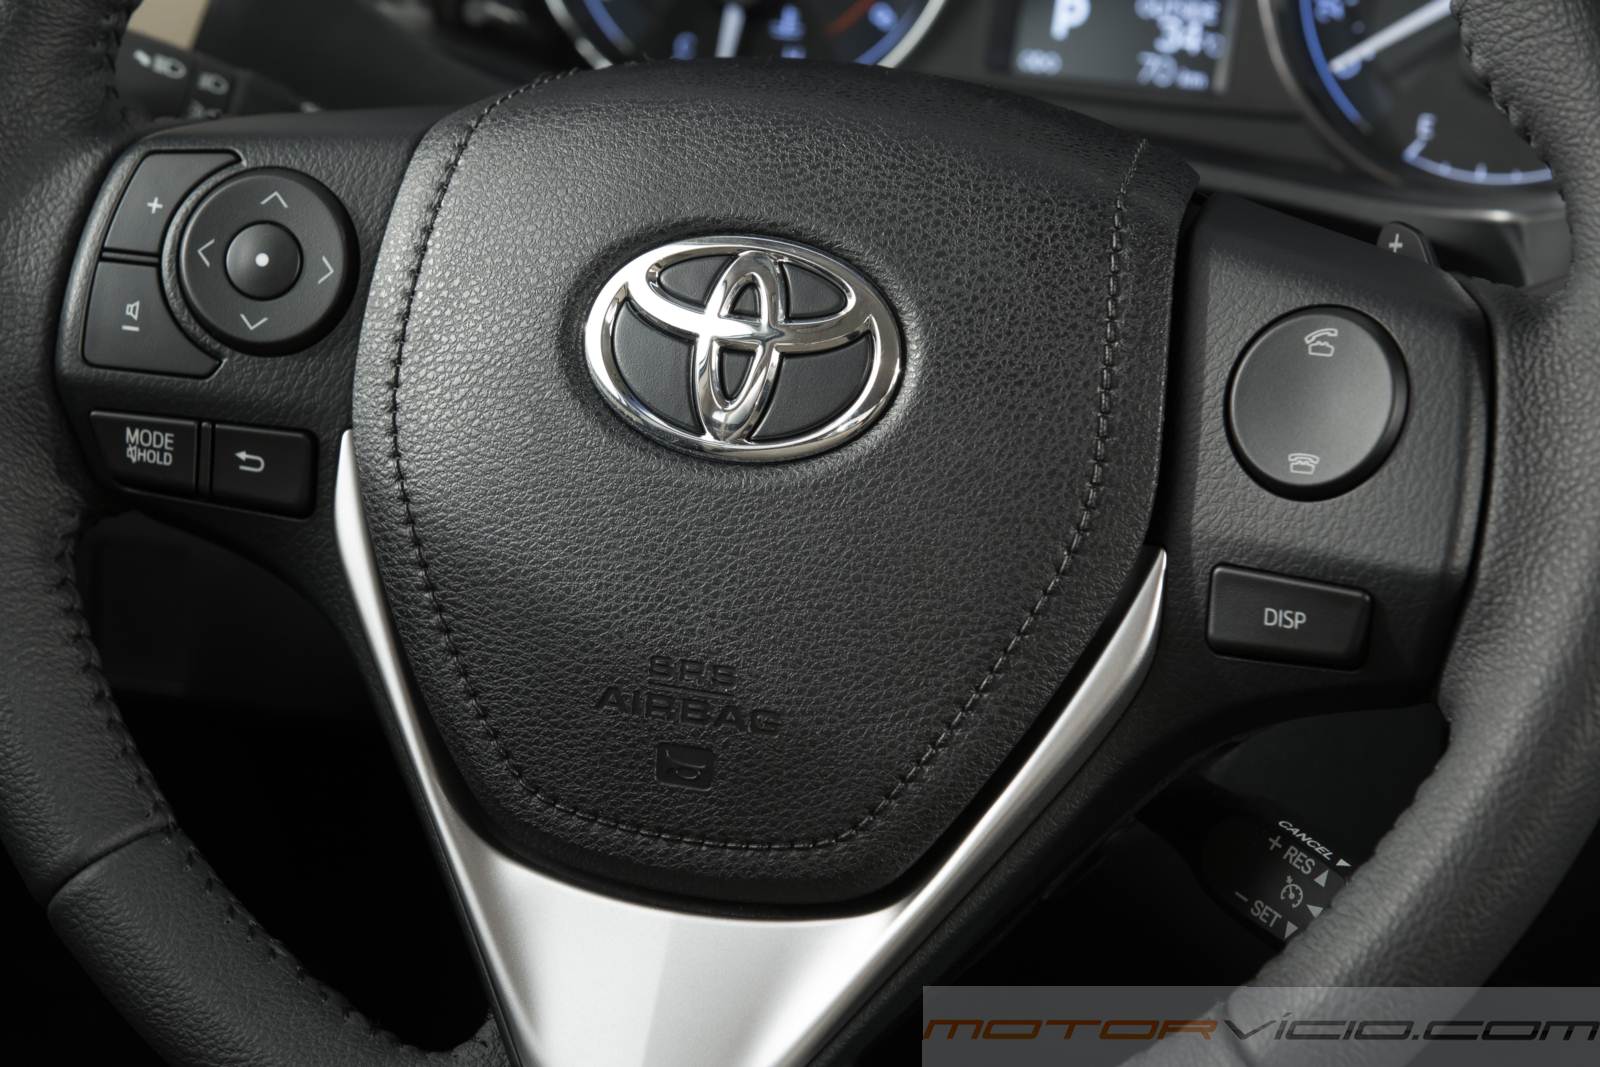 carro Corolla Toyota 2015